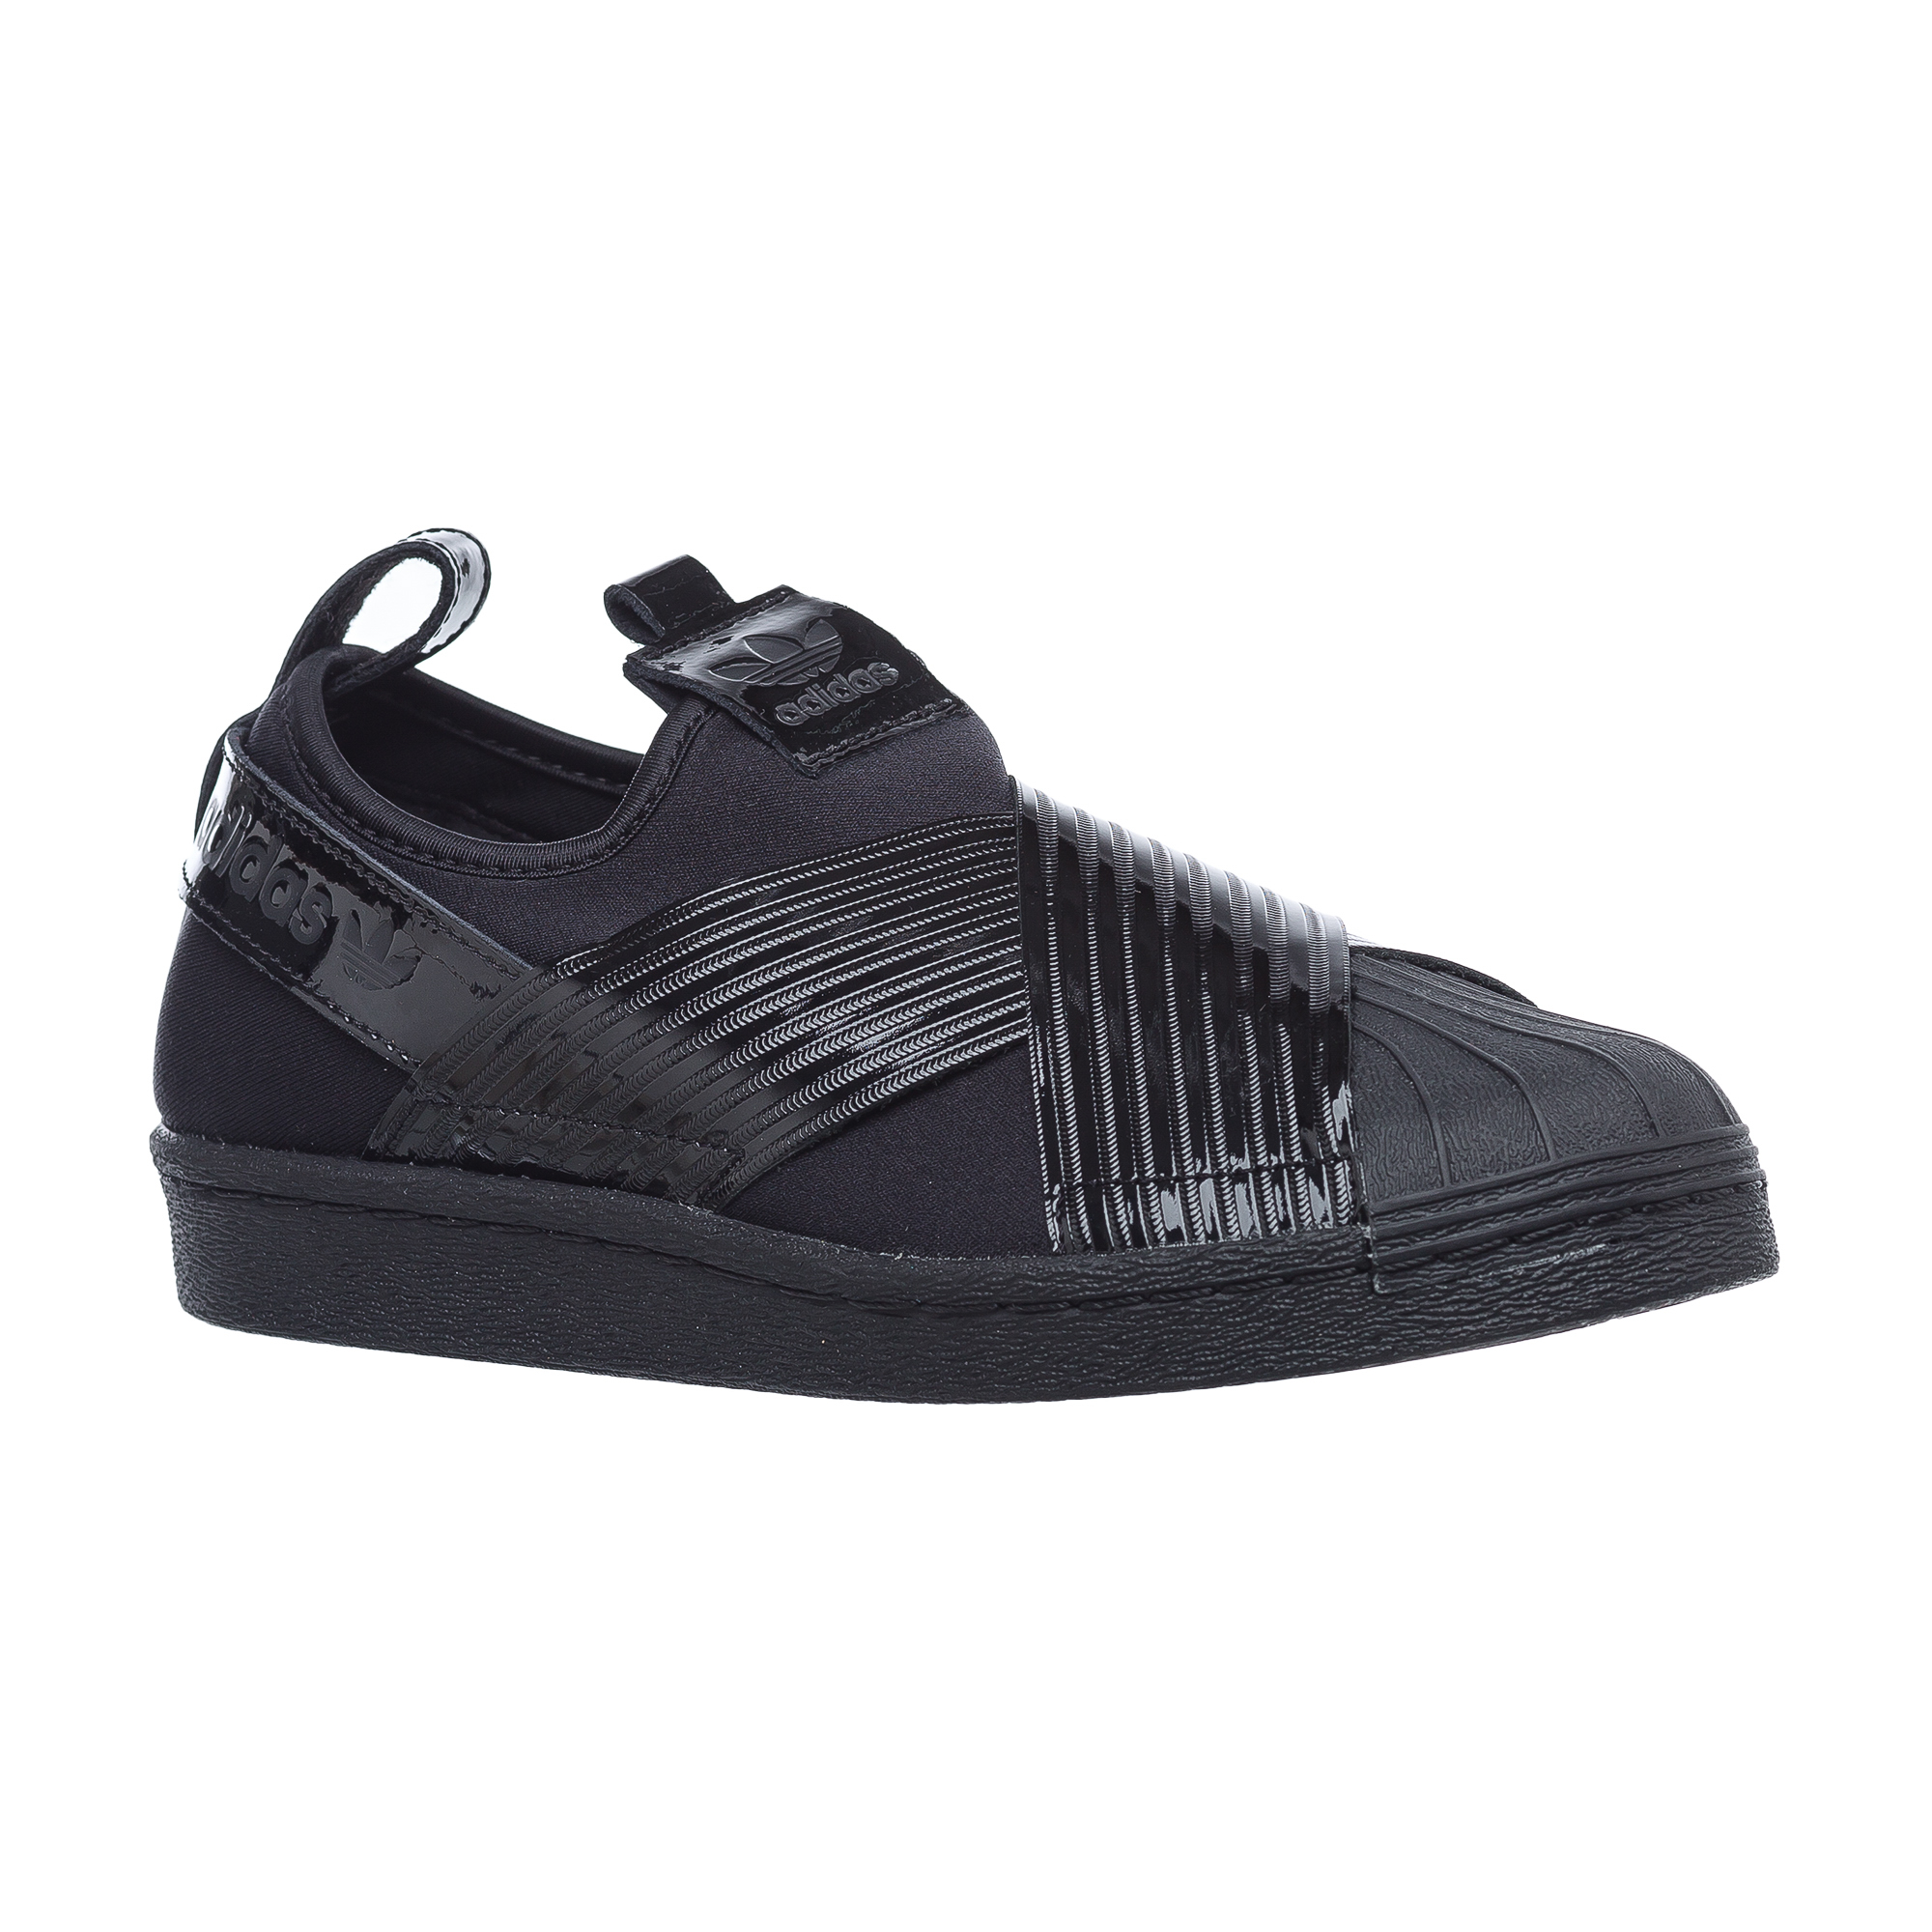 Superstar Slip On Adidas, размер 37, цвет черный ADBD8055 - фото 1